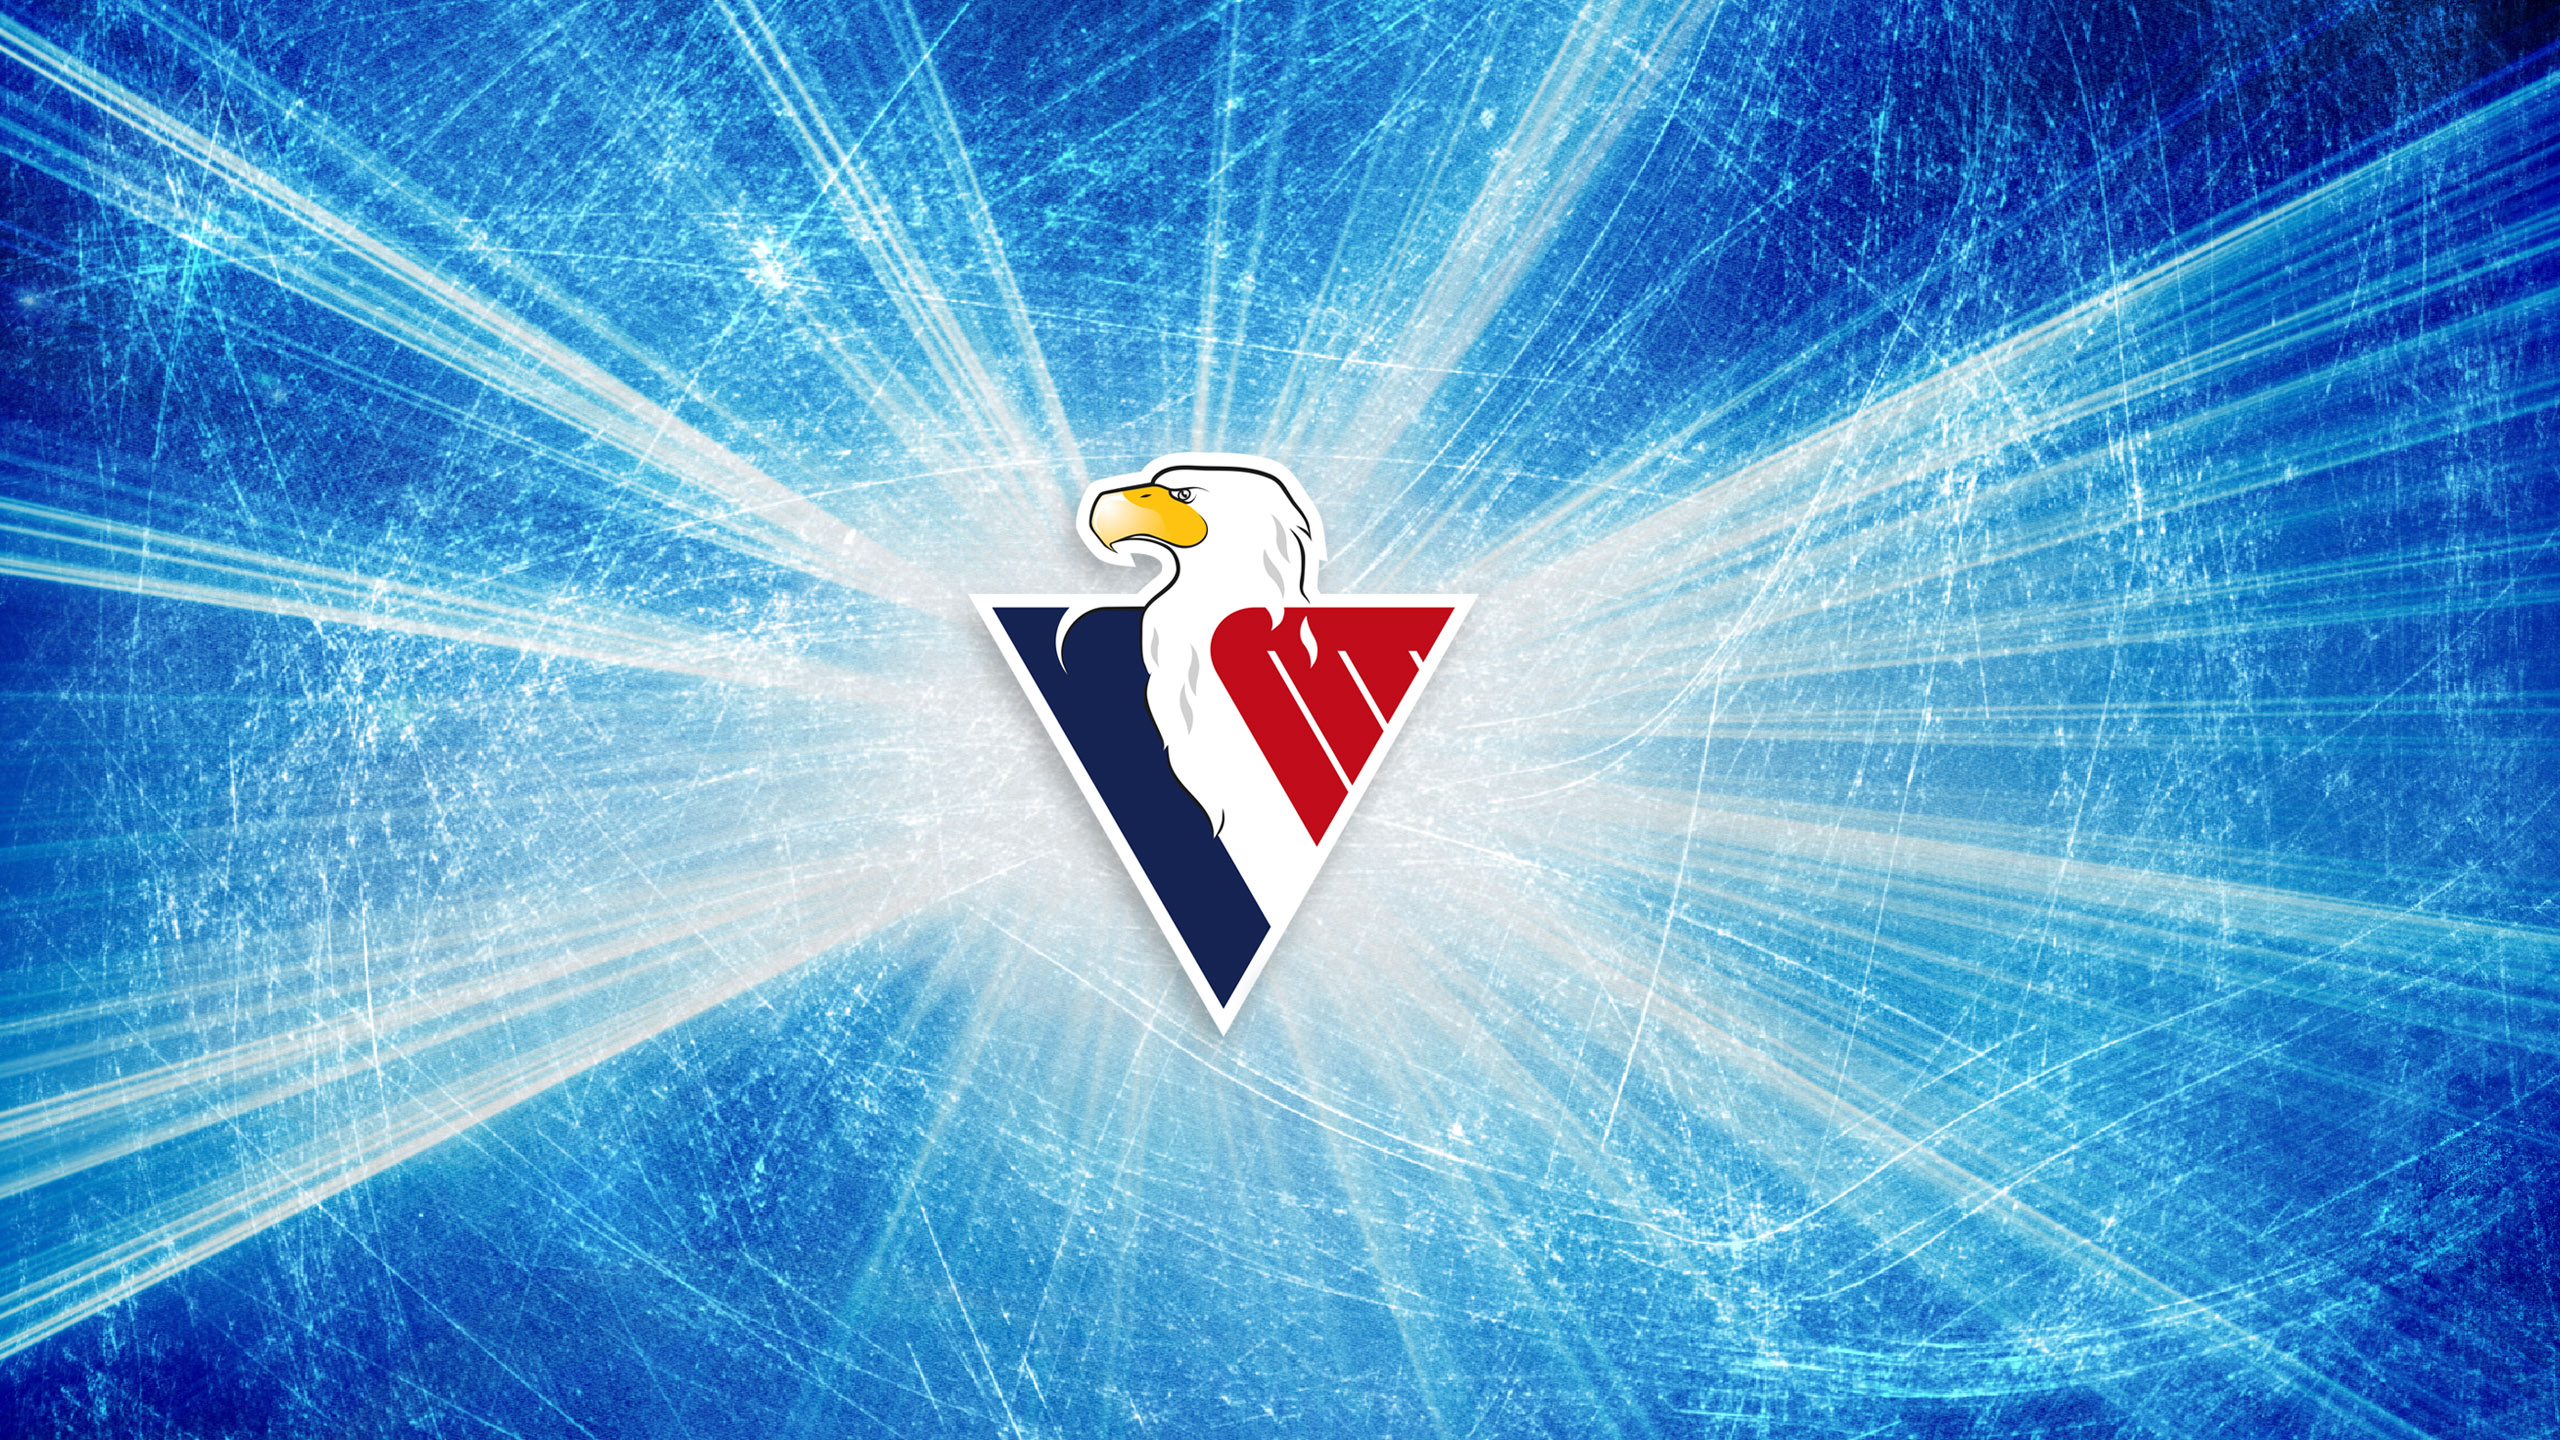 Animals Birds Eagle Digital Art Ice Hockey Logo Ice Triangle 2560x1440